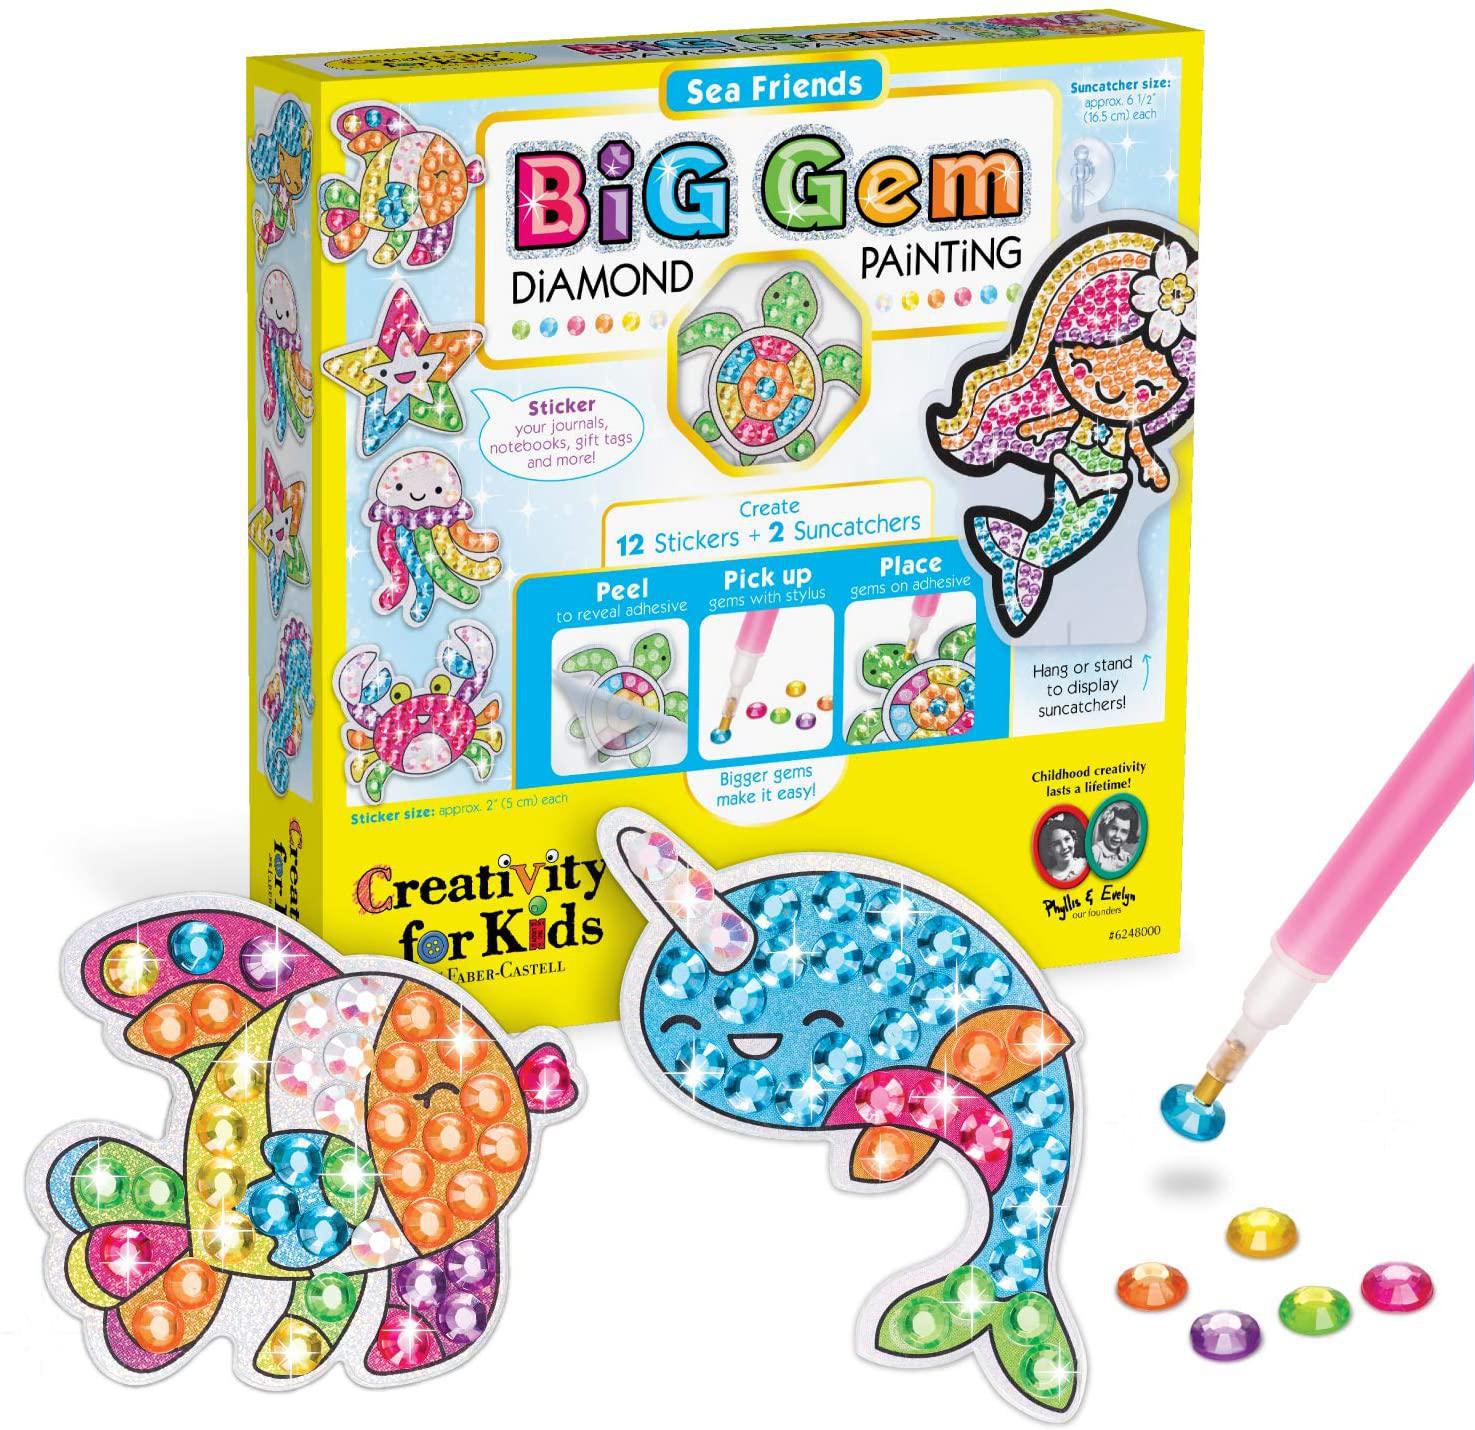 Big Gem Diamond Painting Craft Kit for Kids, Stickers and Suncatchers  (Space)